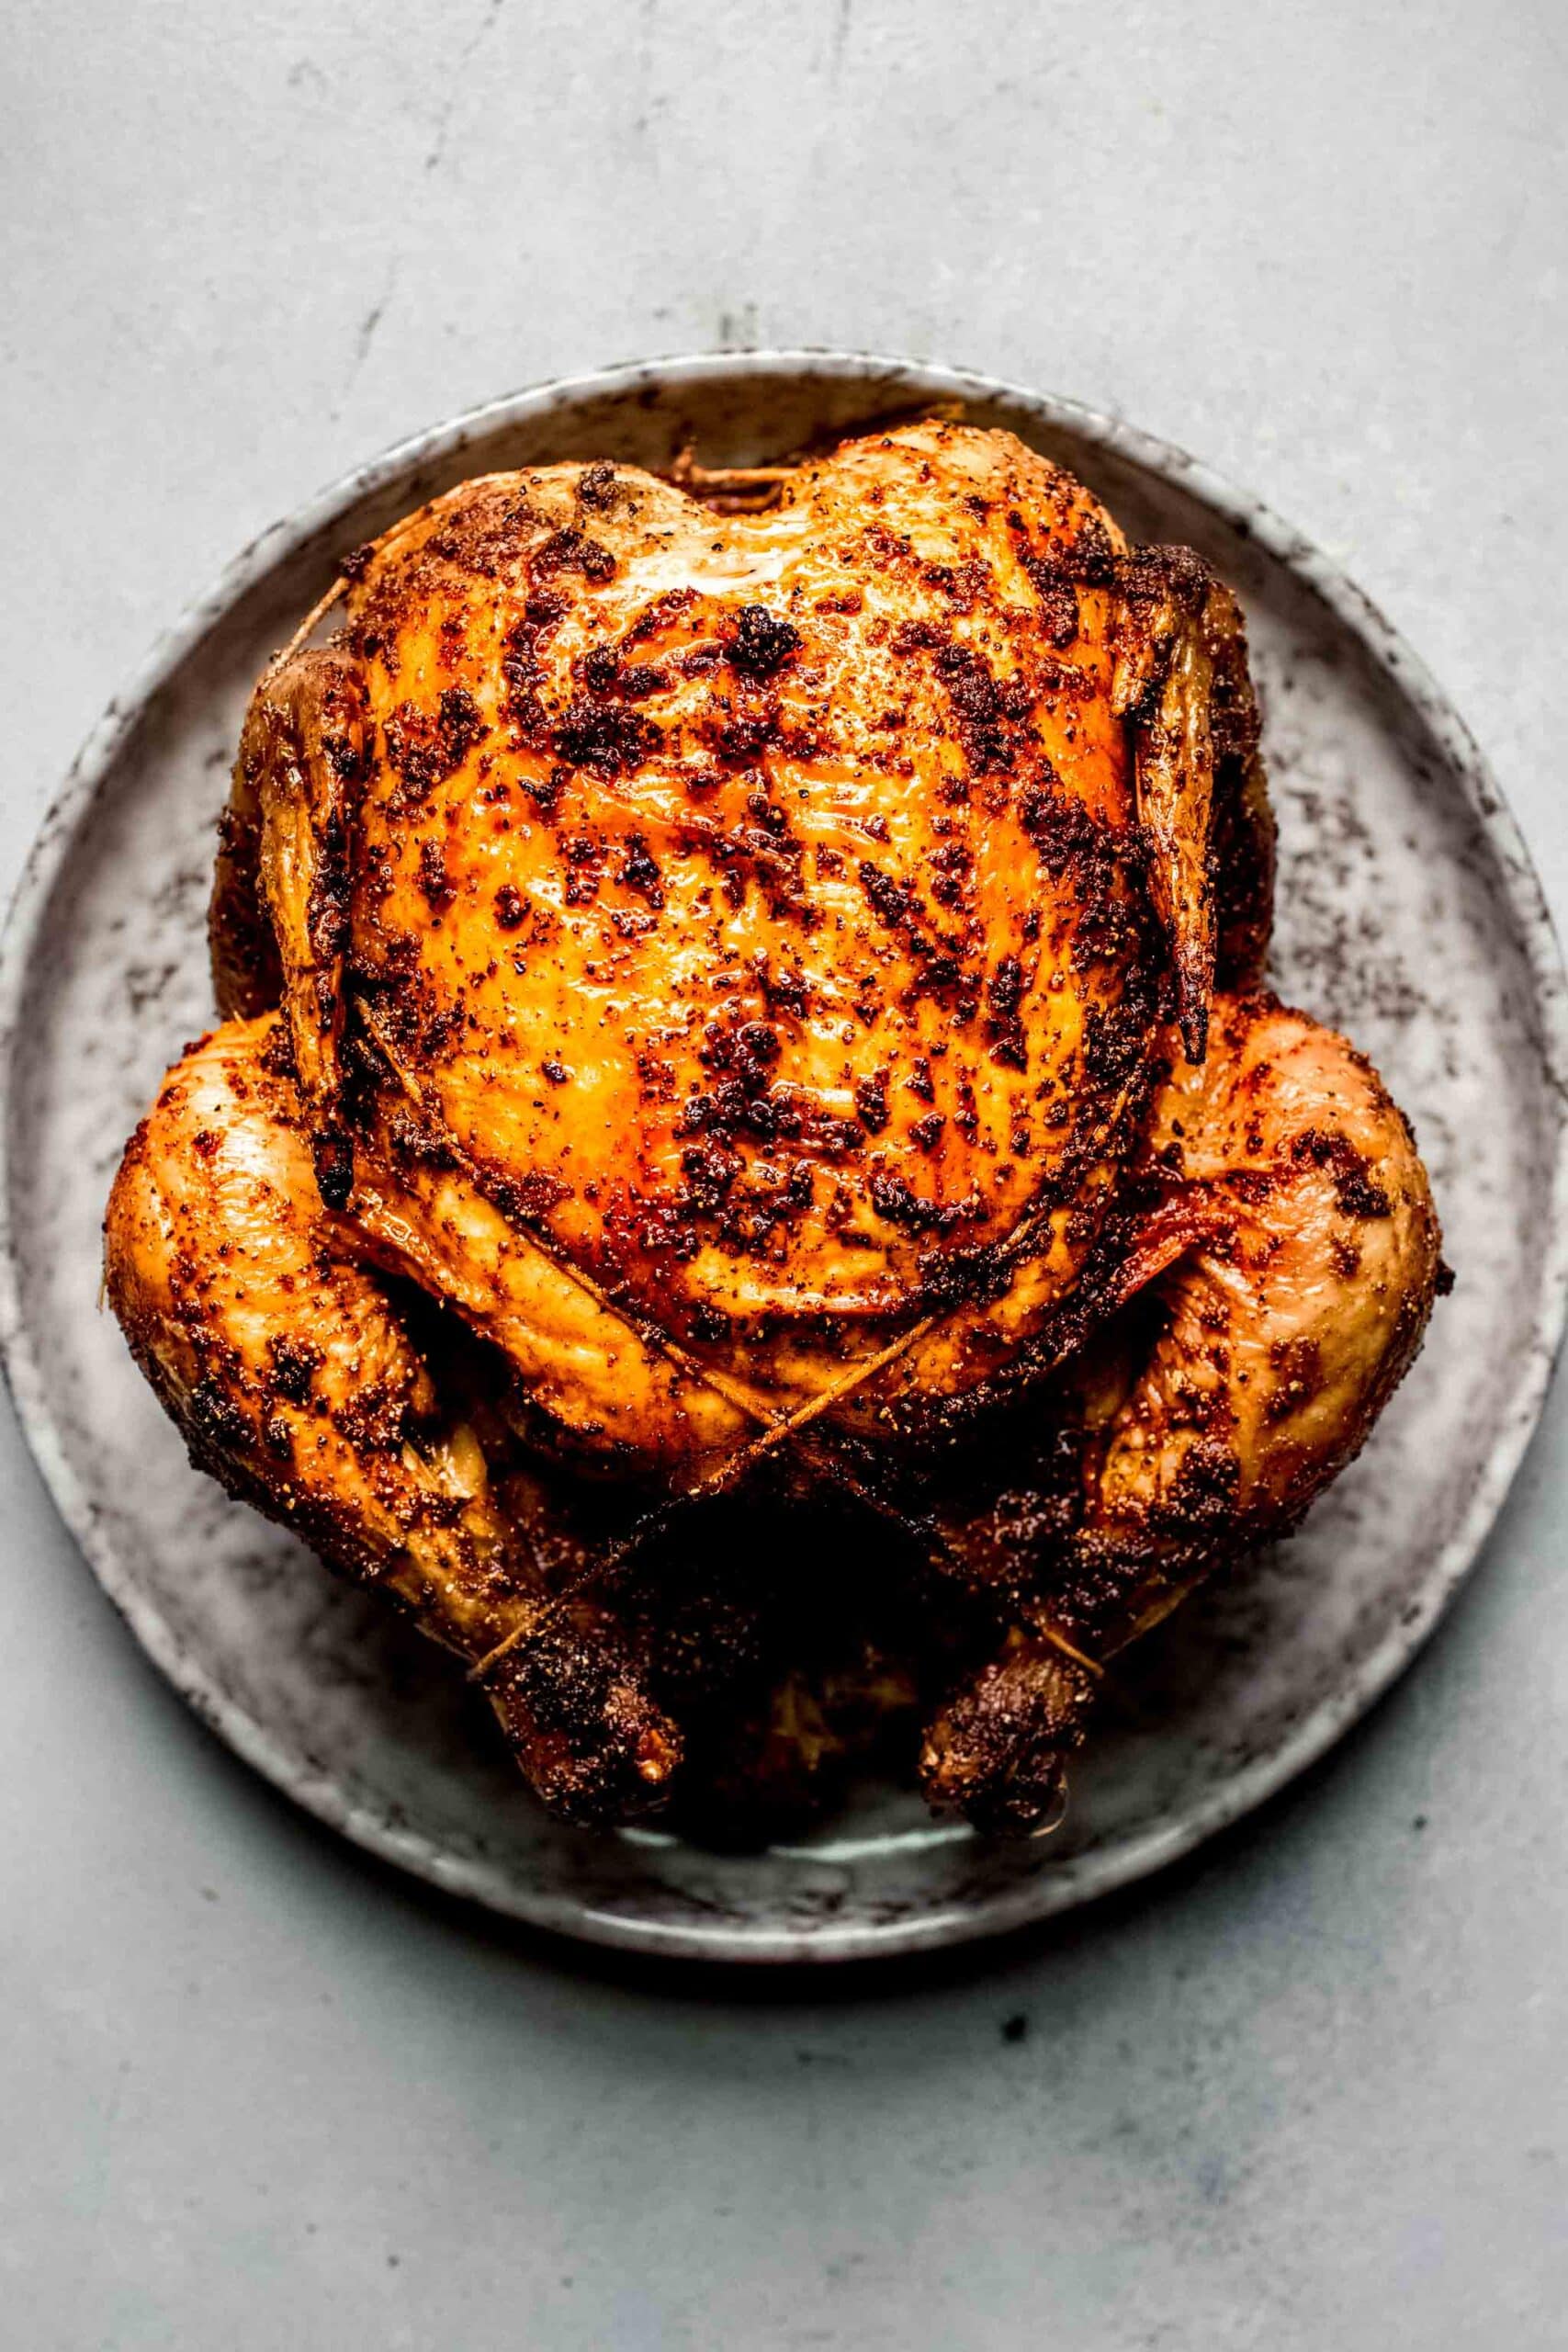 Crispy roast chicken on plate.